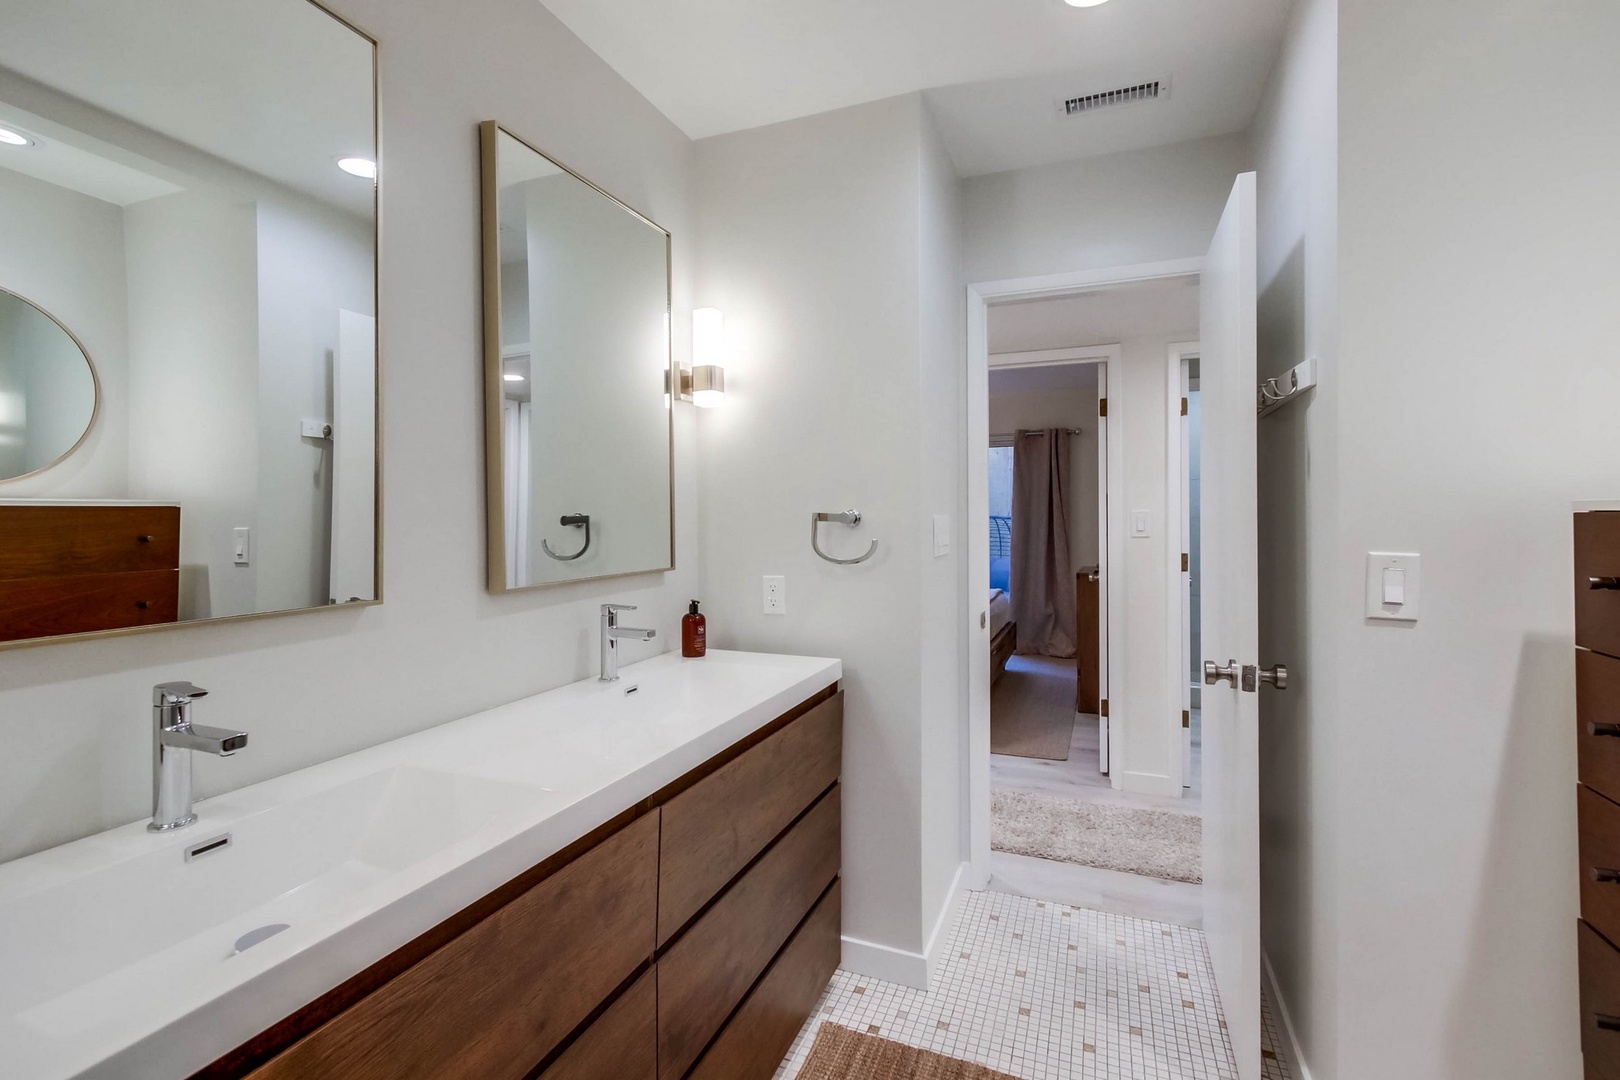 Hall bathroom with dual sink vanity